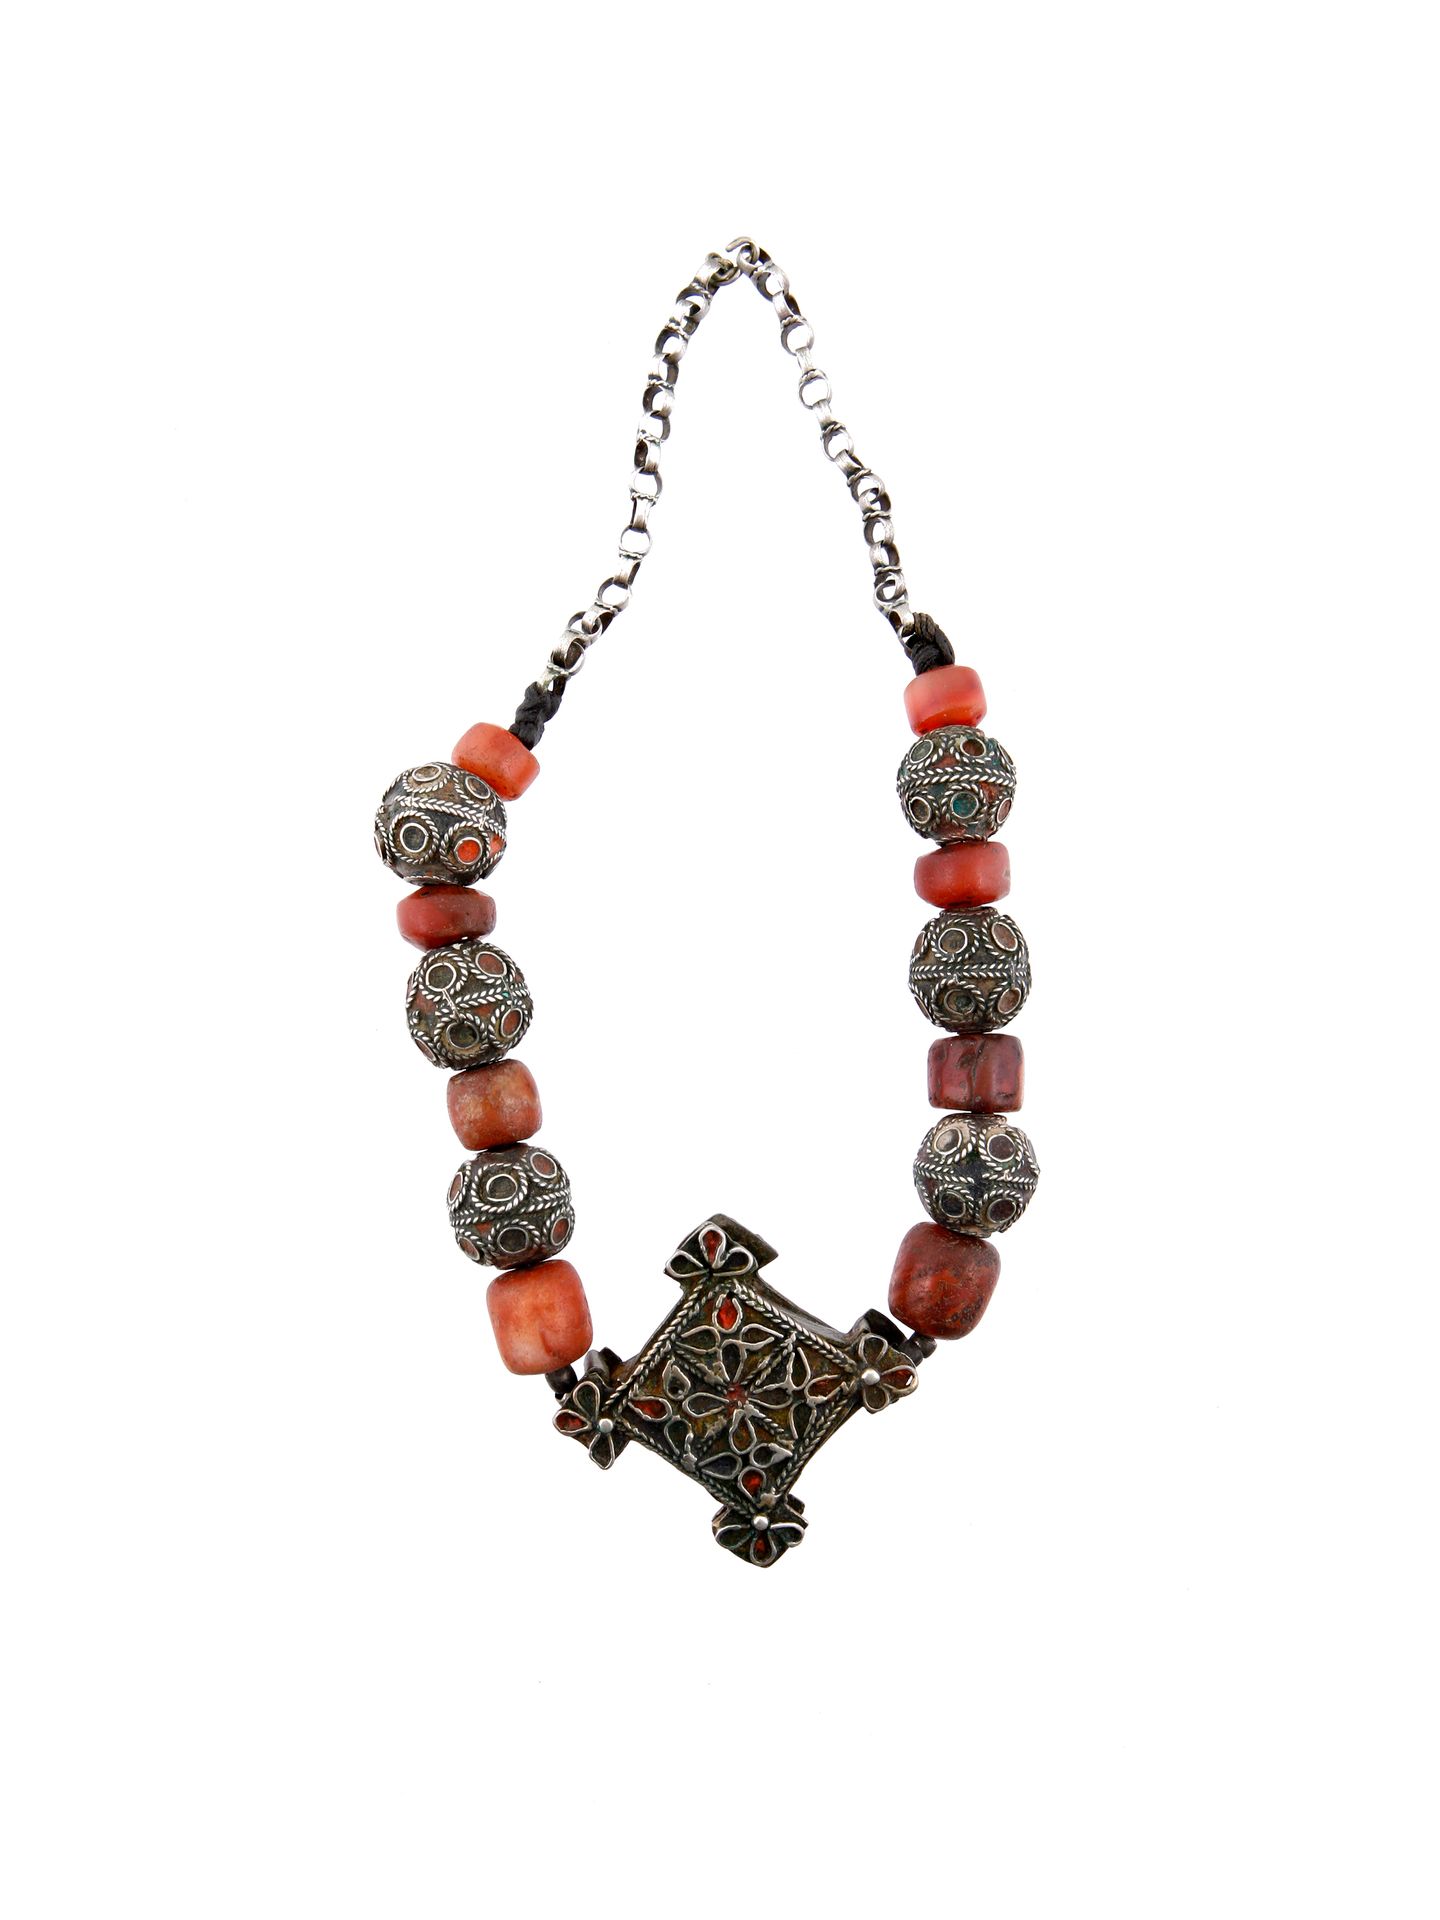 A Berber Necklace with a central Pendant Collier mit zentralem Schmuck-Anhänger
&hellip;